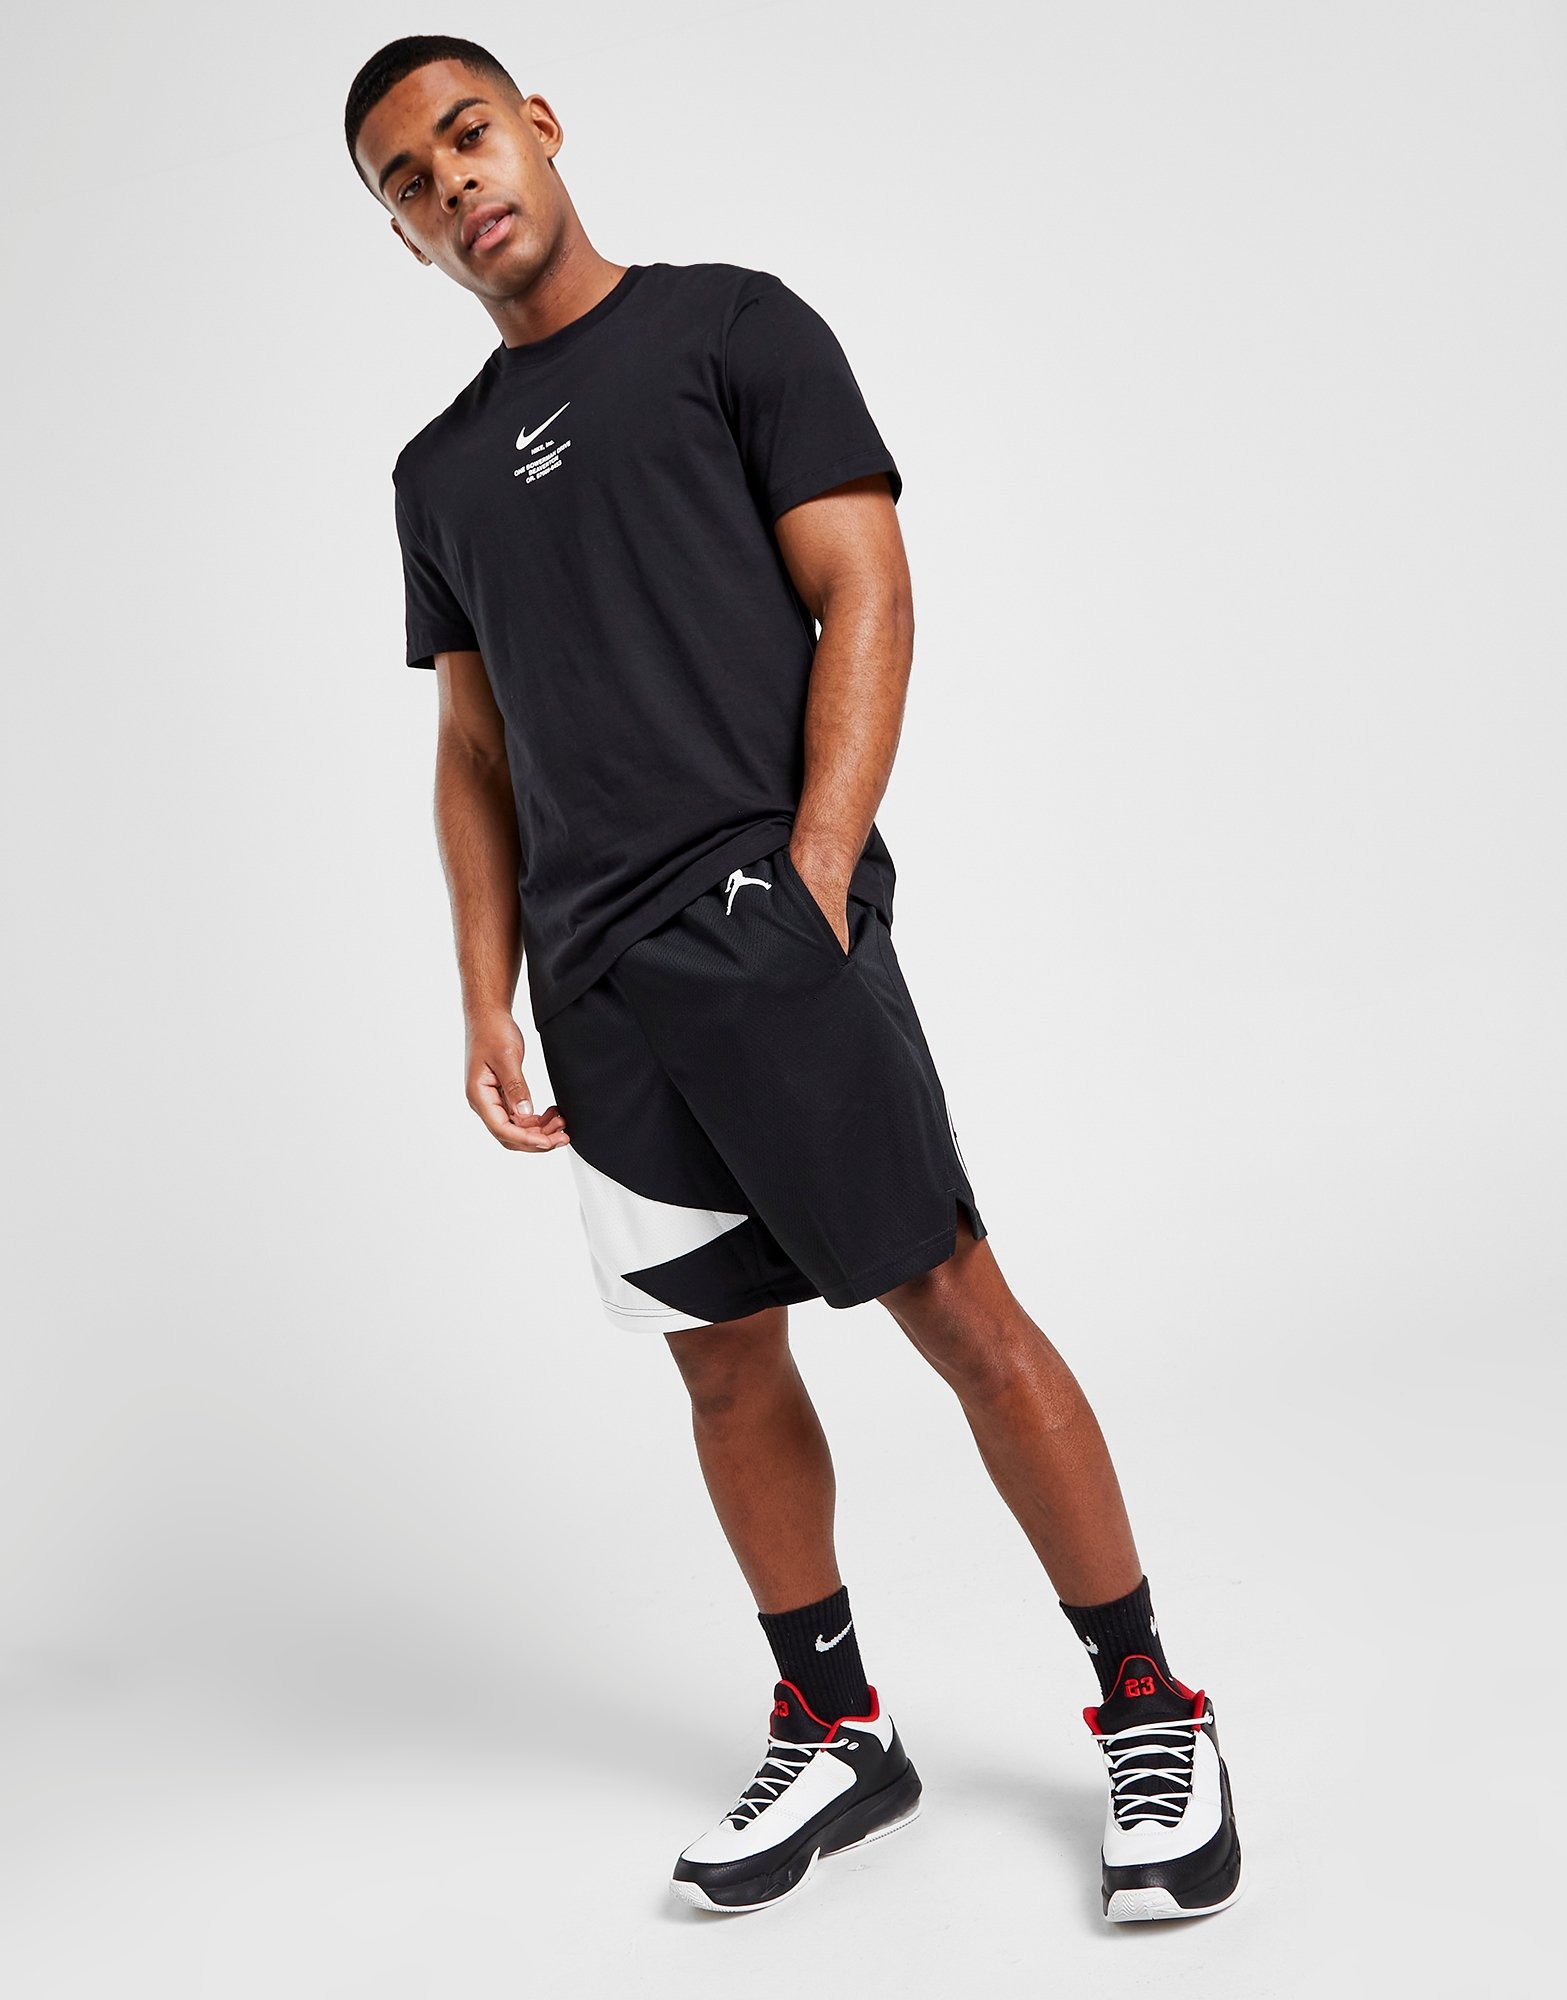 LA Clippers Men's Nike NBA Mesh Shorts.